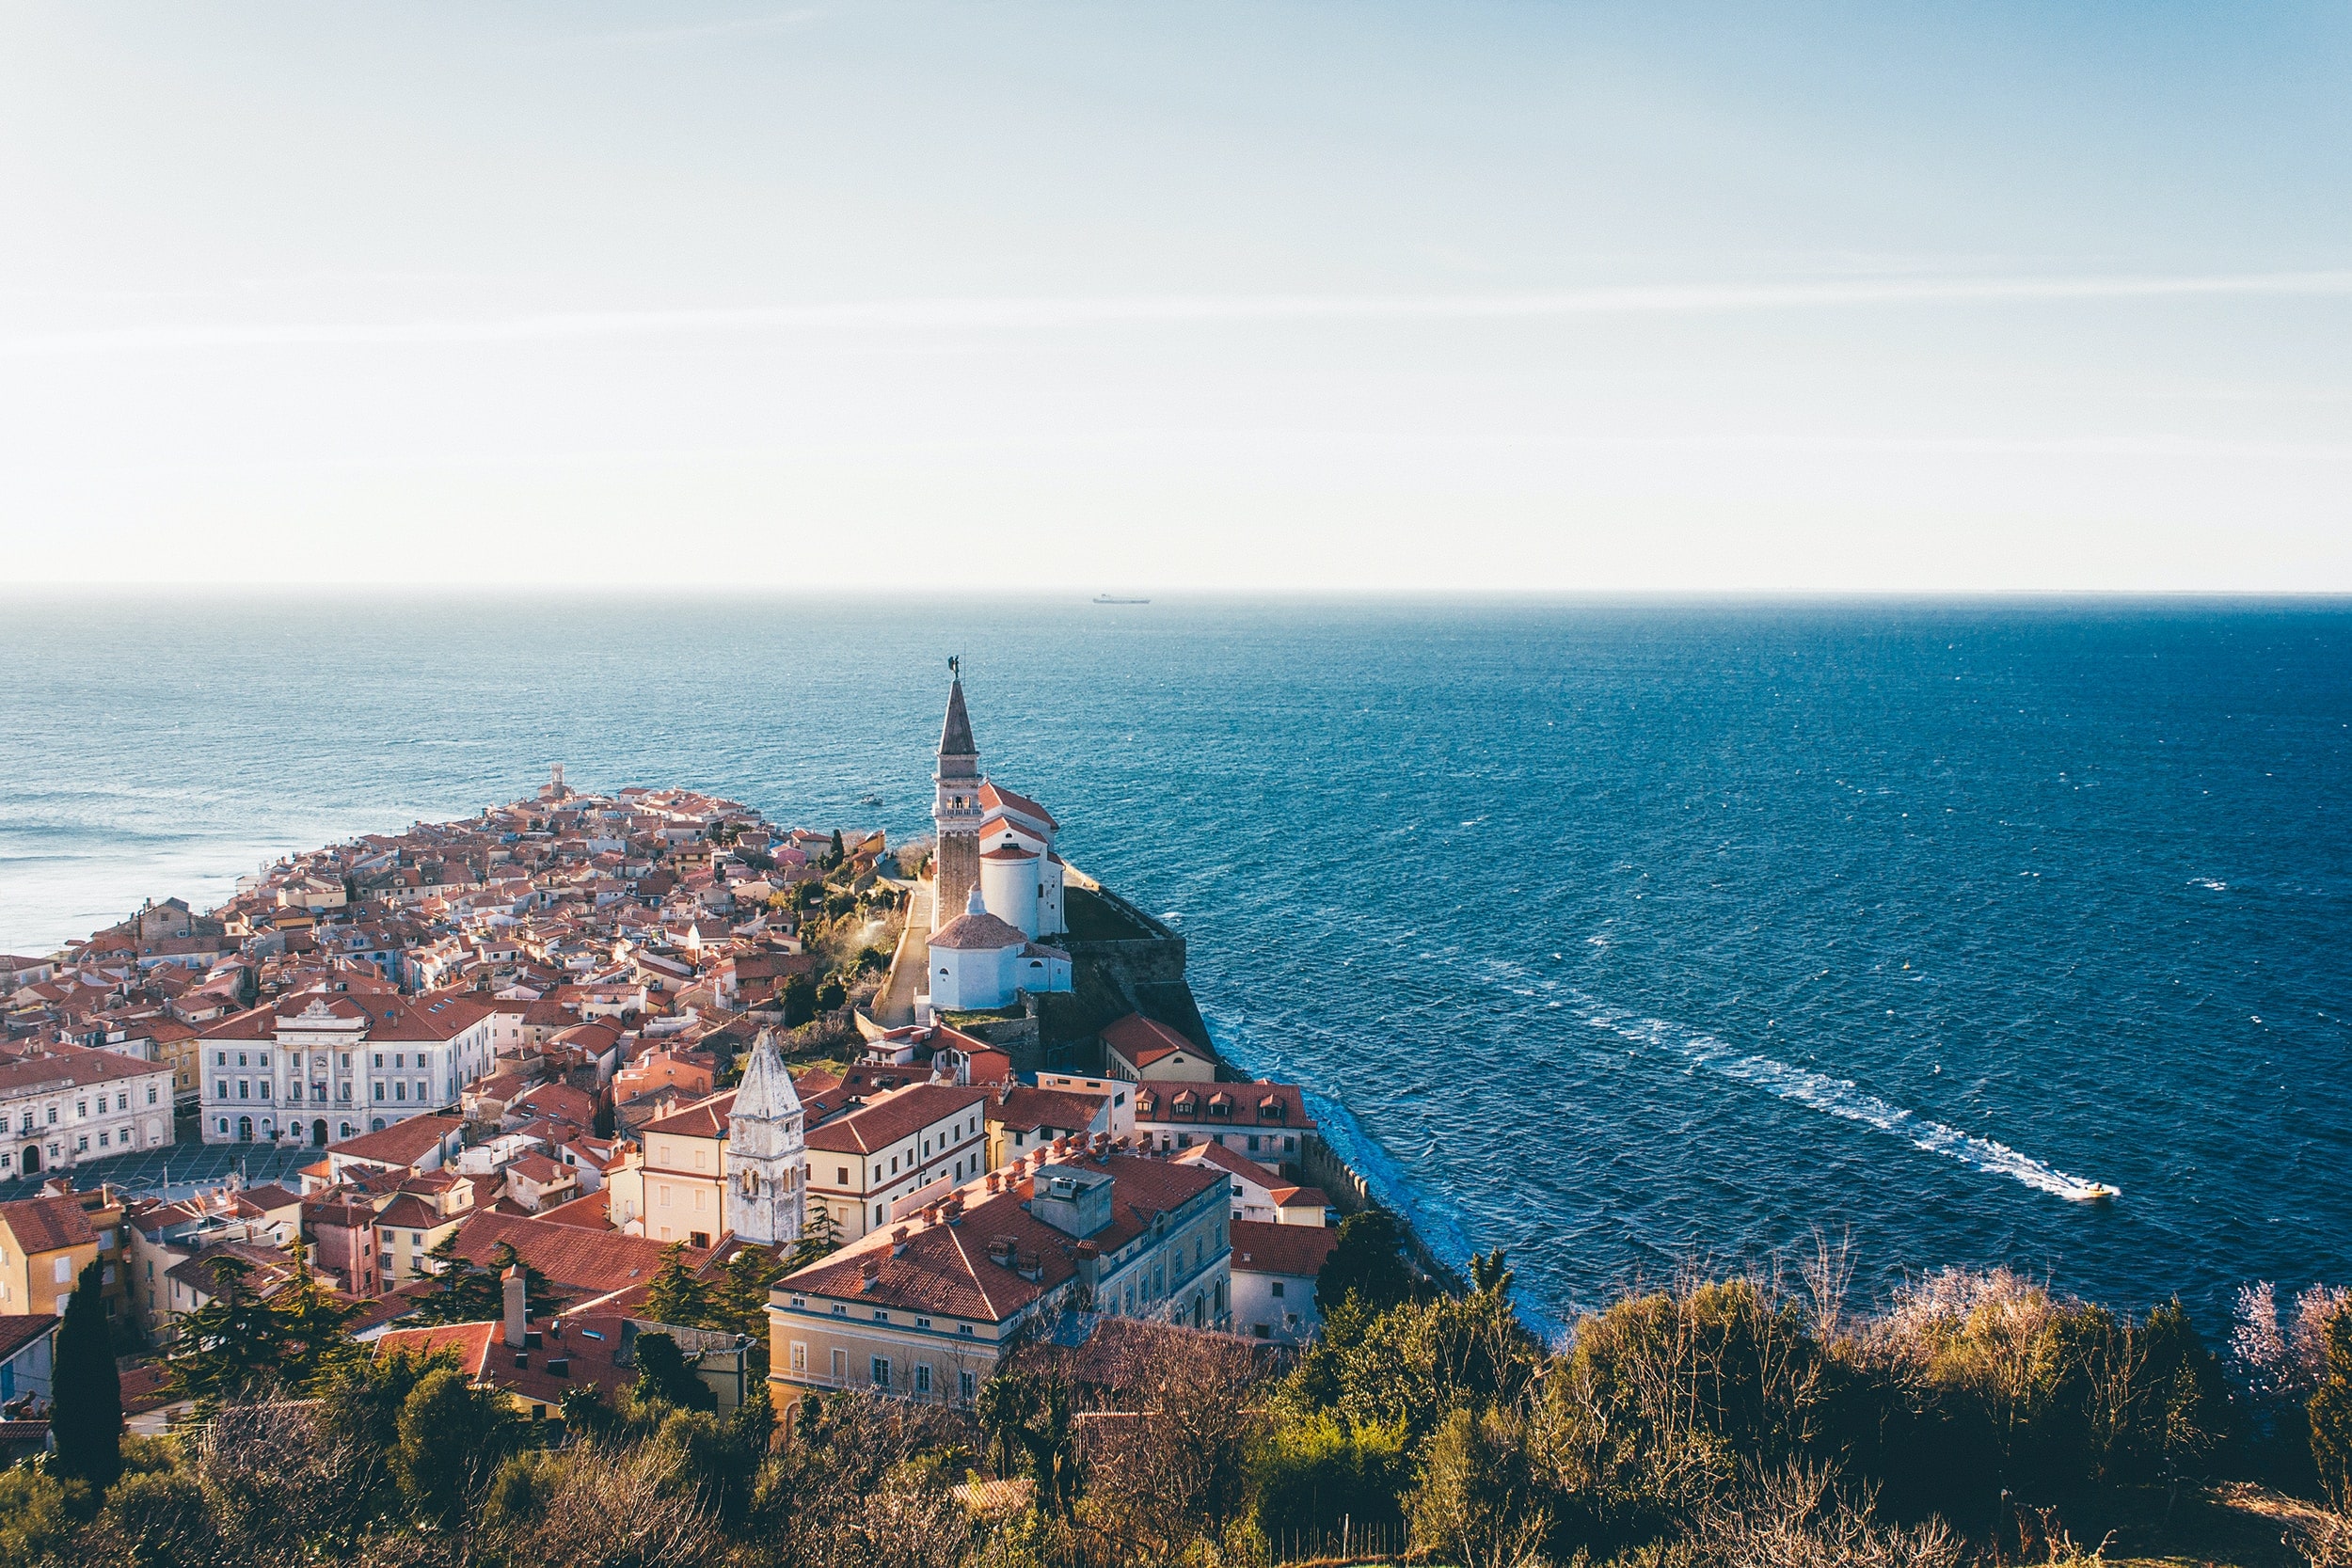 Piran, the prettiest town on the Adriatic coast of Slovenia